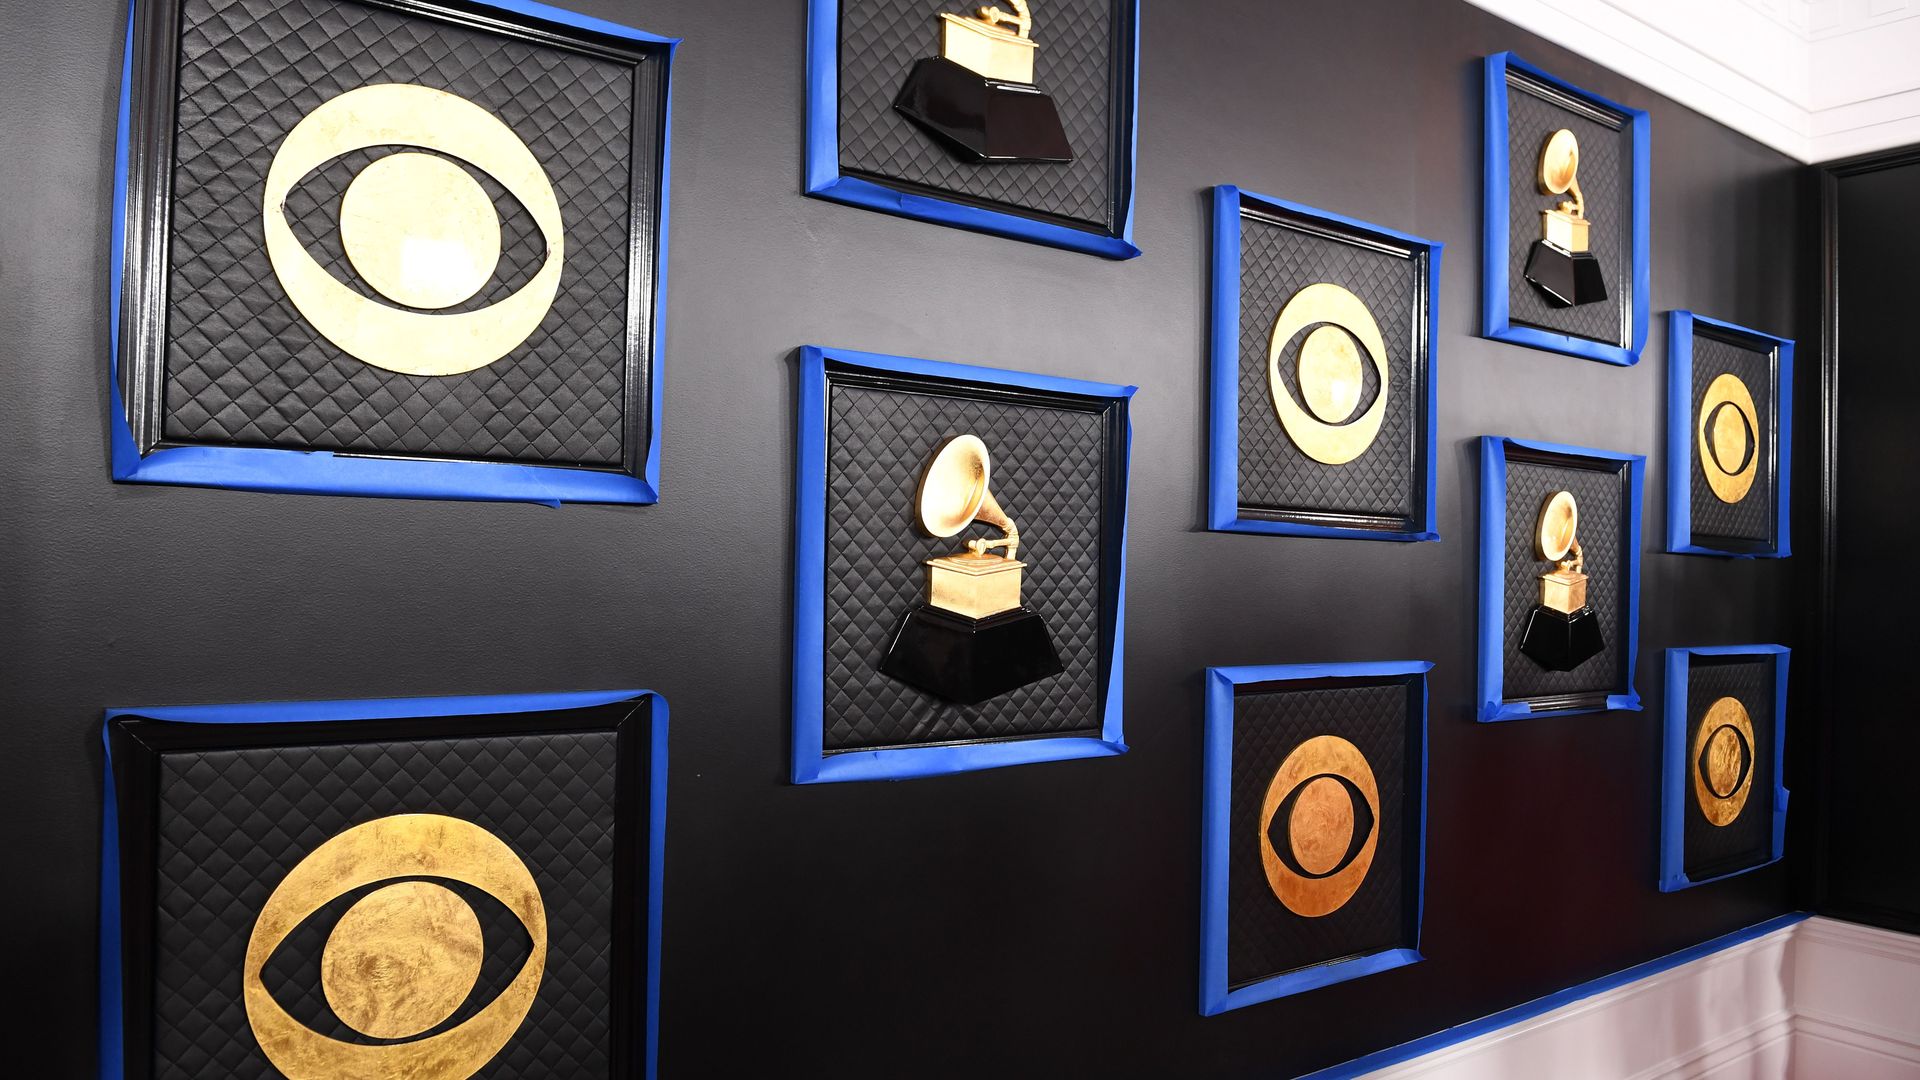 The Grammy Awards logos backdrop